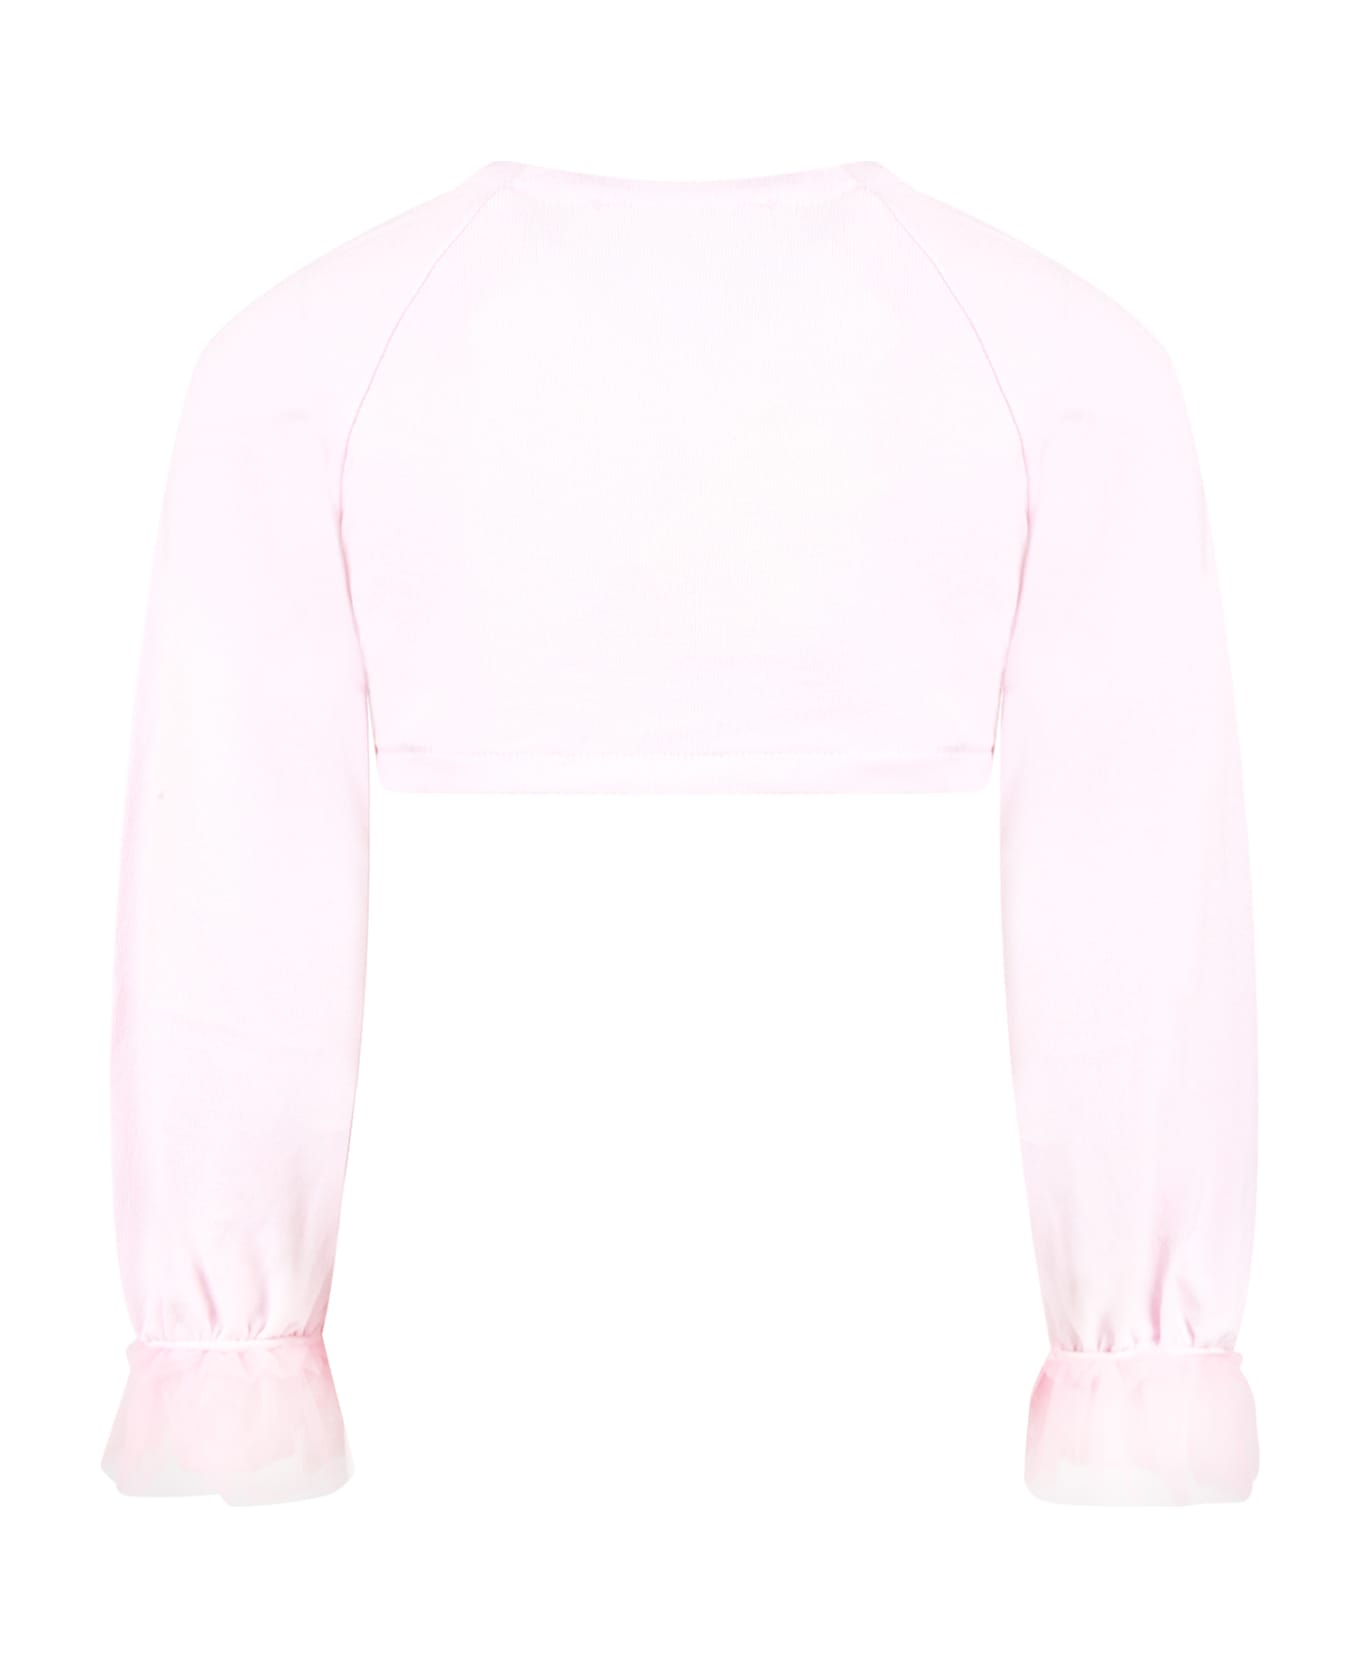 Monnalisa Pink Cardigan For Girl With Logo - Pink